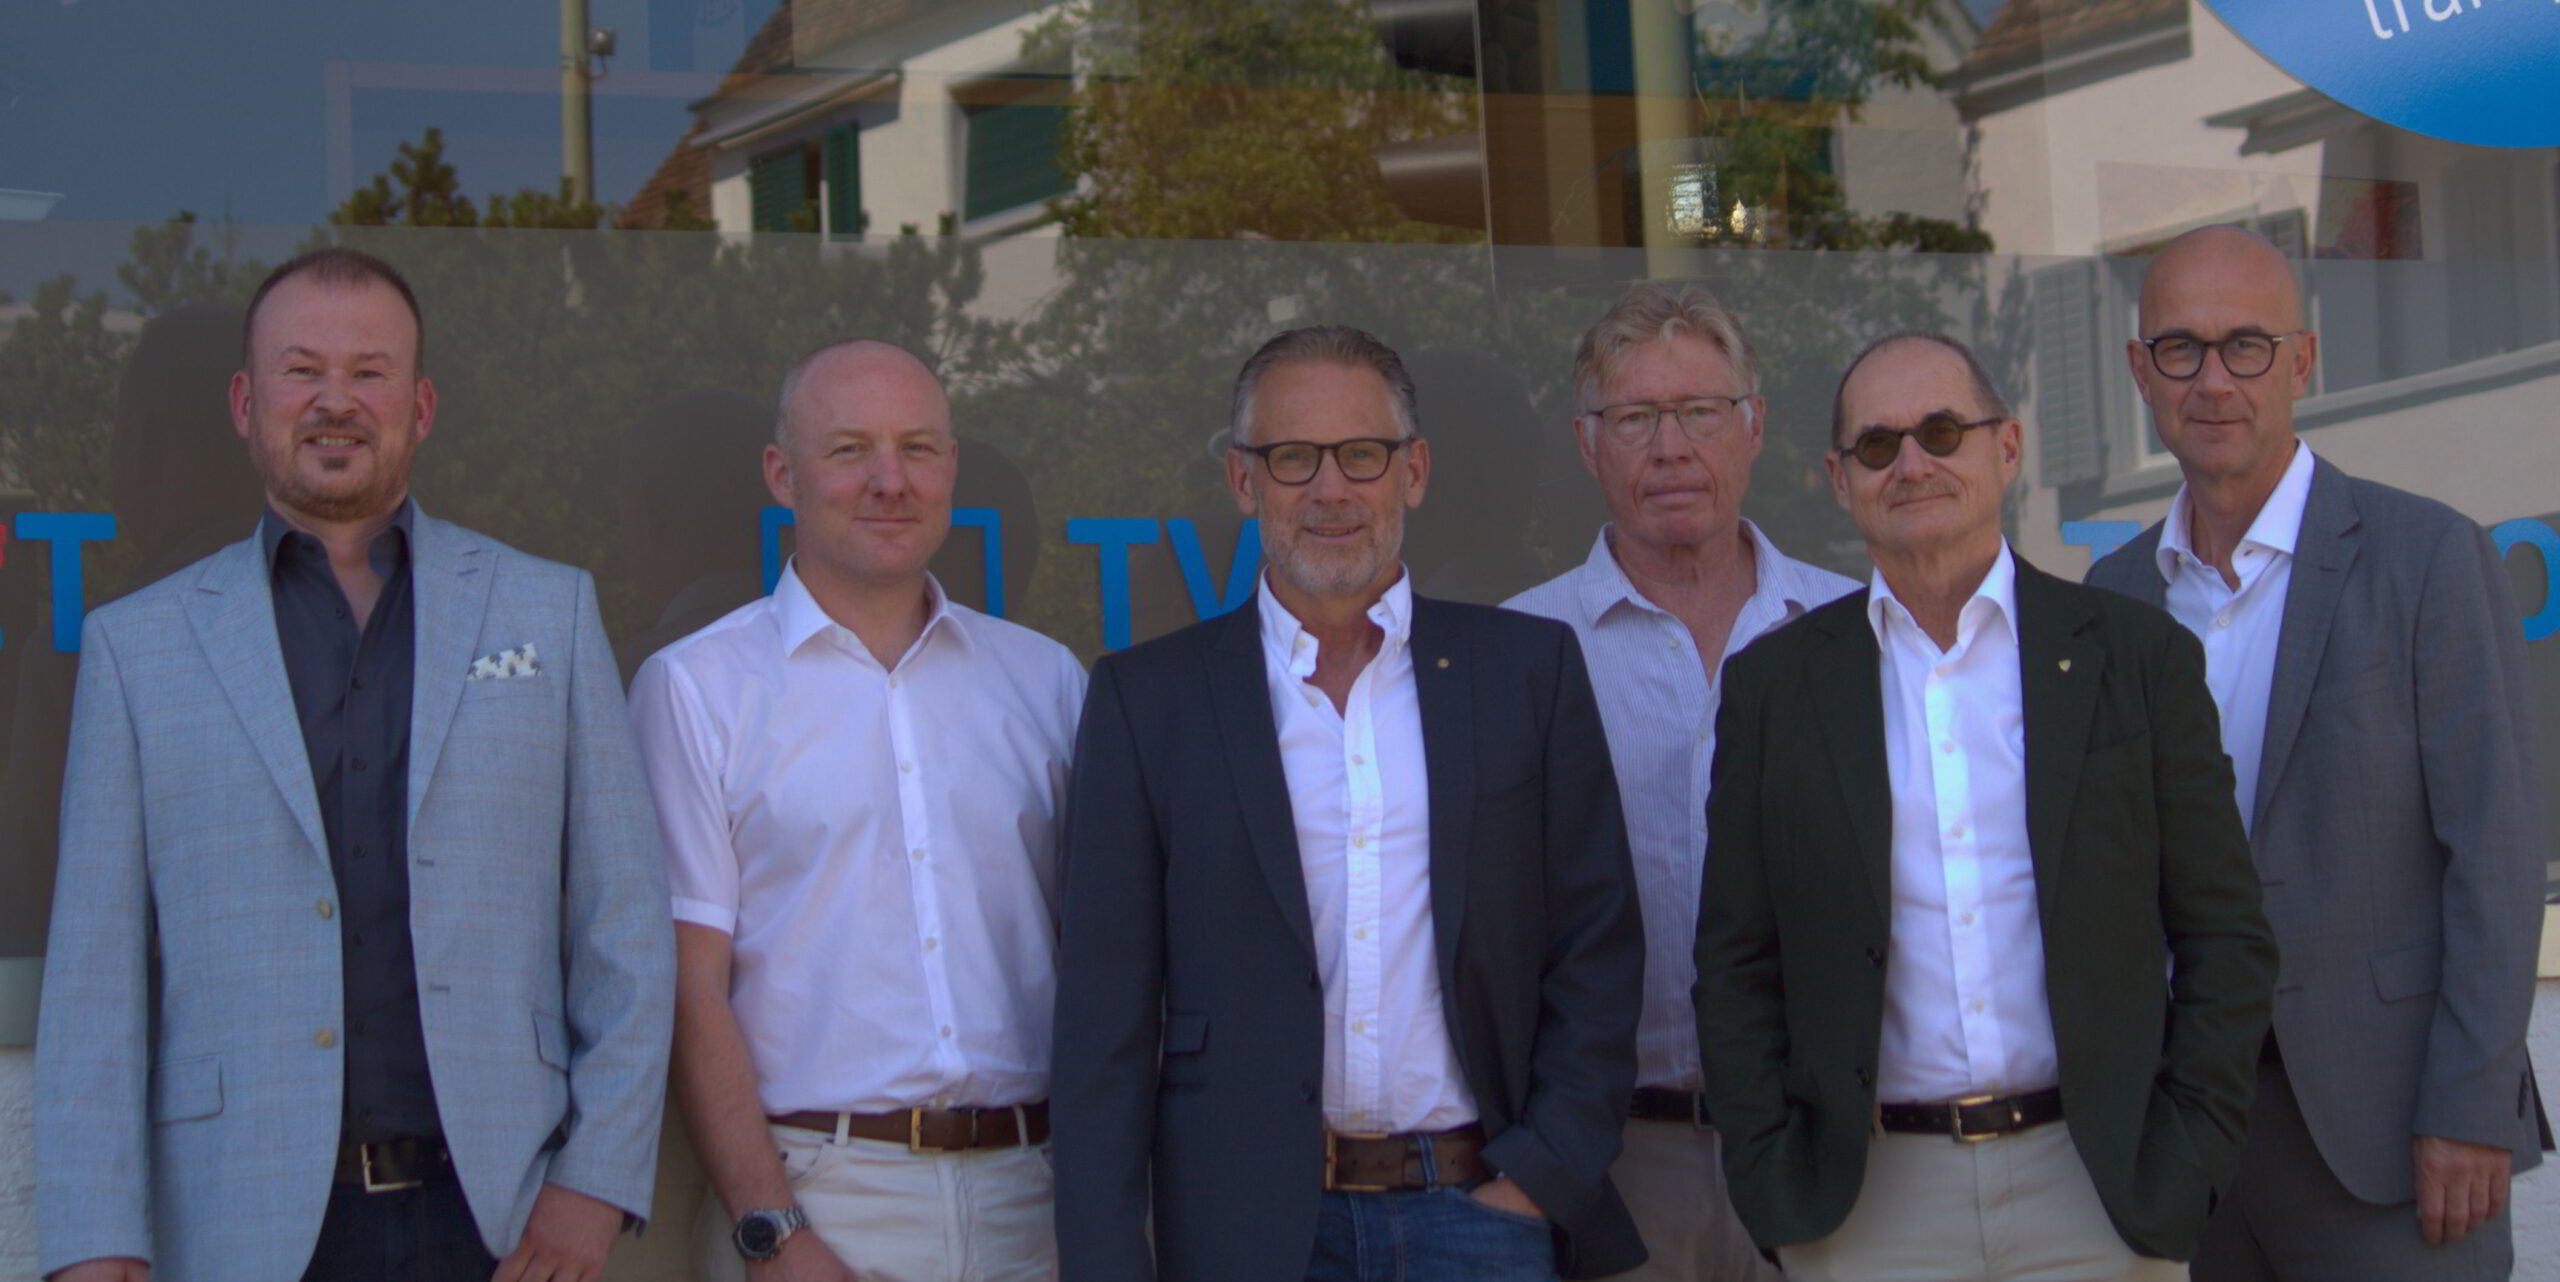 Marcel Forrer, Sven Guyer (Swisscom), Daniel Weber, Werner Fröhli, Peter Neuenschwander und Markus Reber (Swisscom) (v.l.) zeigten sich nach der Vertragsunterzeichnung zufrieden. (Bild: lfi)